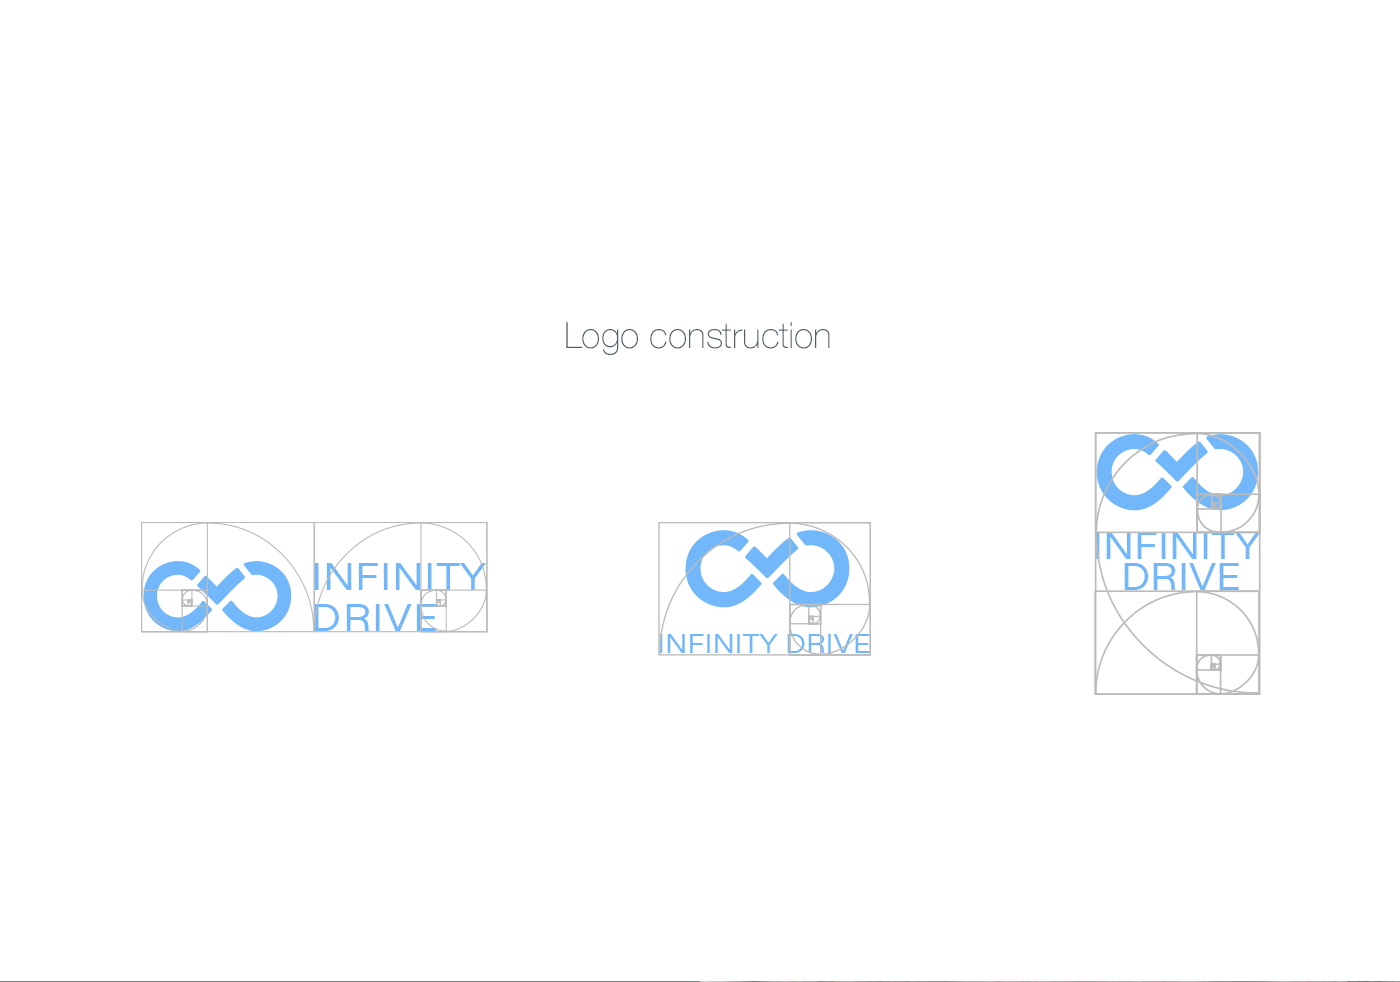 Identity Logo - Brand Identity Design for Startups on Behance